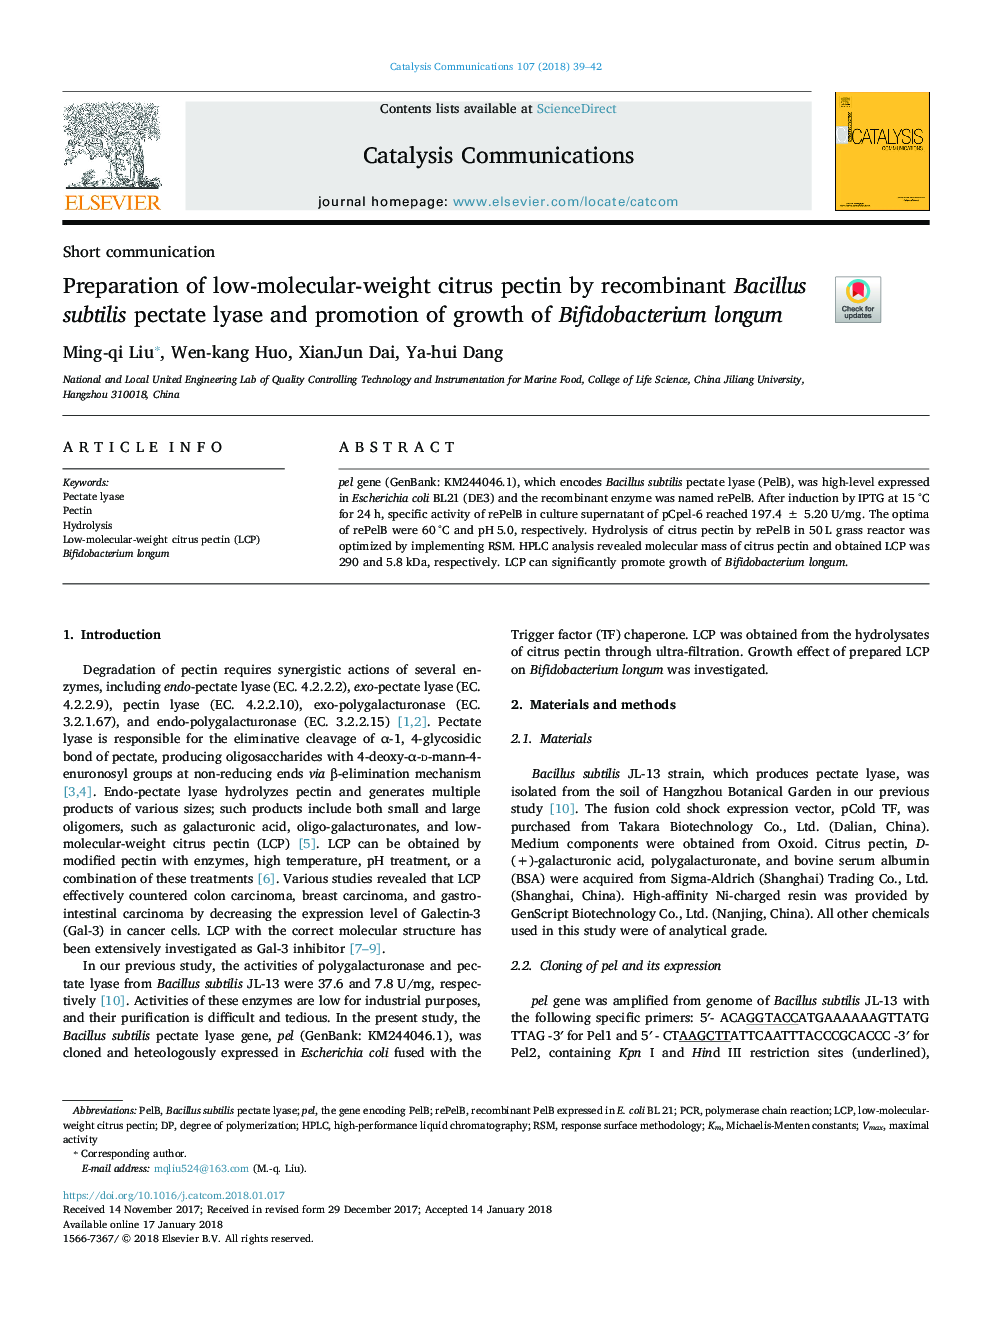 Preparation of low-molecular-weight citrus pectin by recombinant Bacillus subtilis pectate lyase and promotion of growth of Bifidobacterium longum